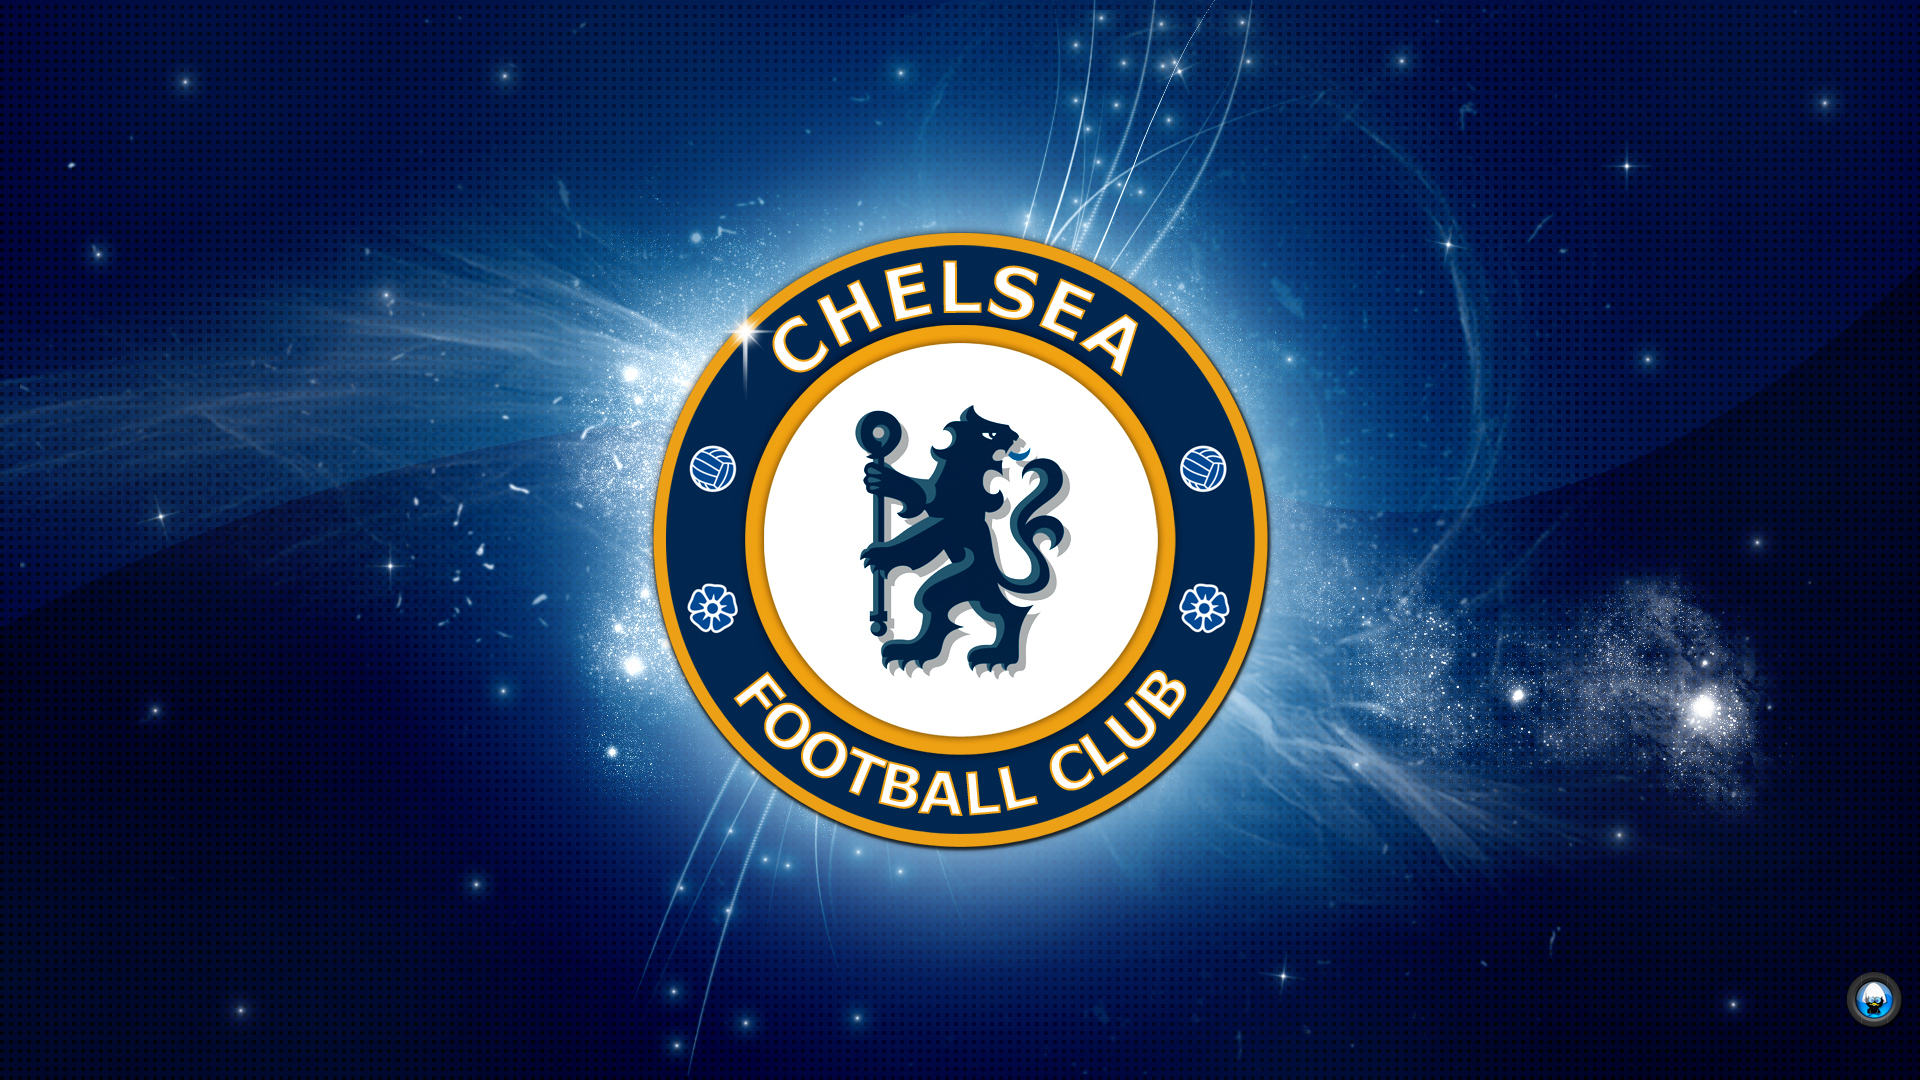 Chelsea Football Club - istorie și momente interesante ale Klondy